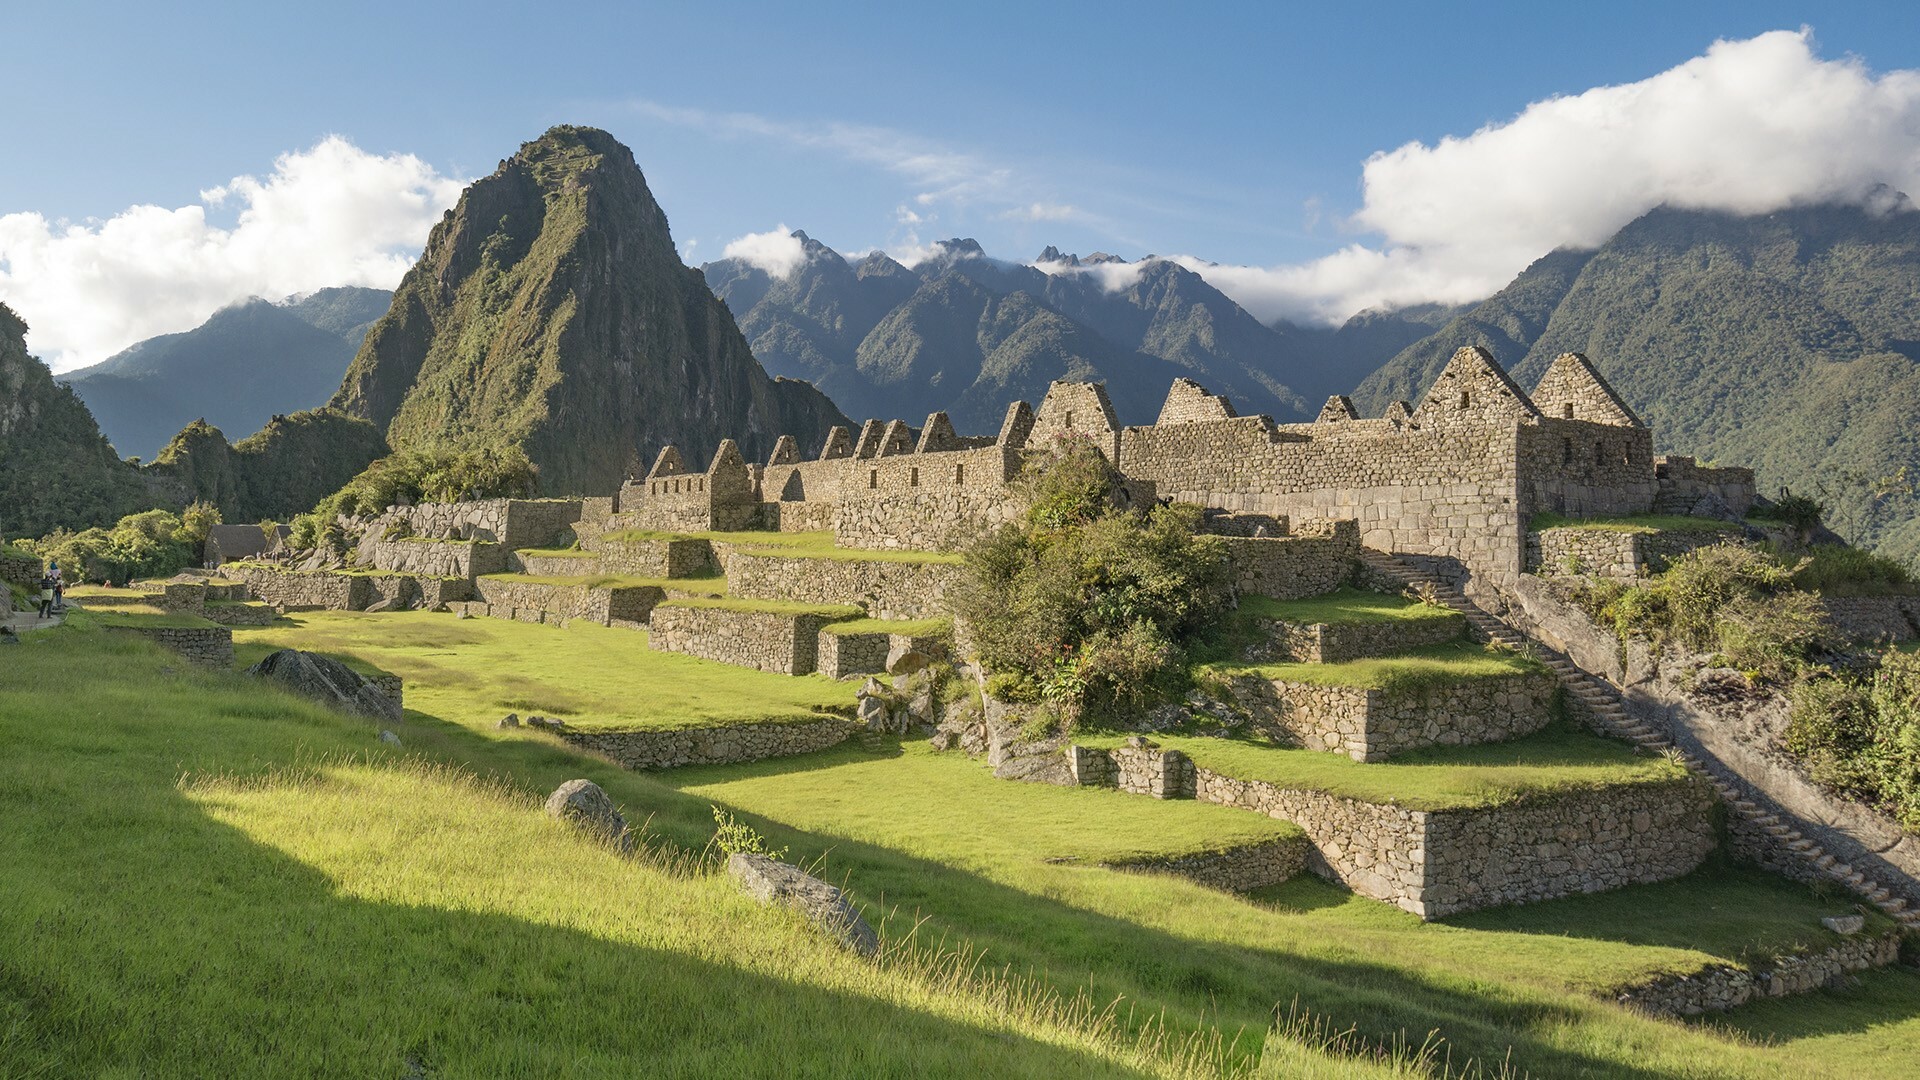 Machu Picchu: Abandoned Inca citadel, Eastern Cordillera of southern Peru. 1920x1080 Full HD Wallpaper.